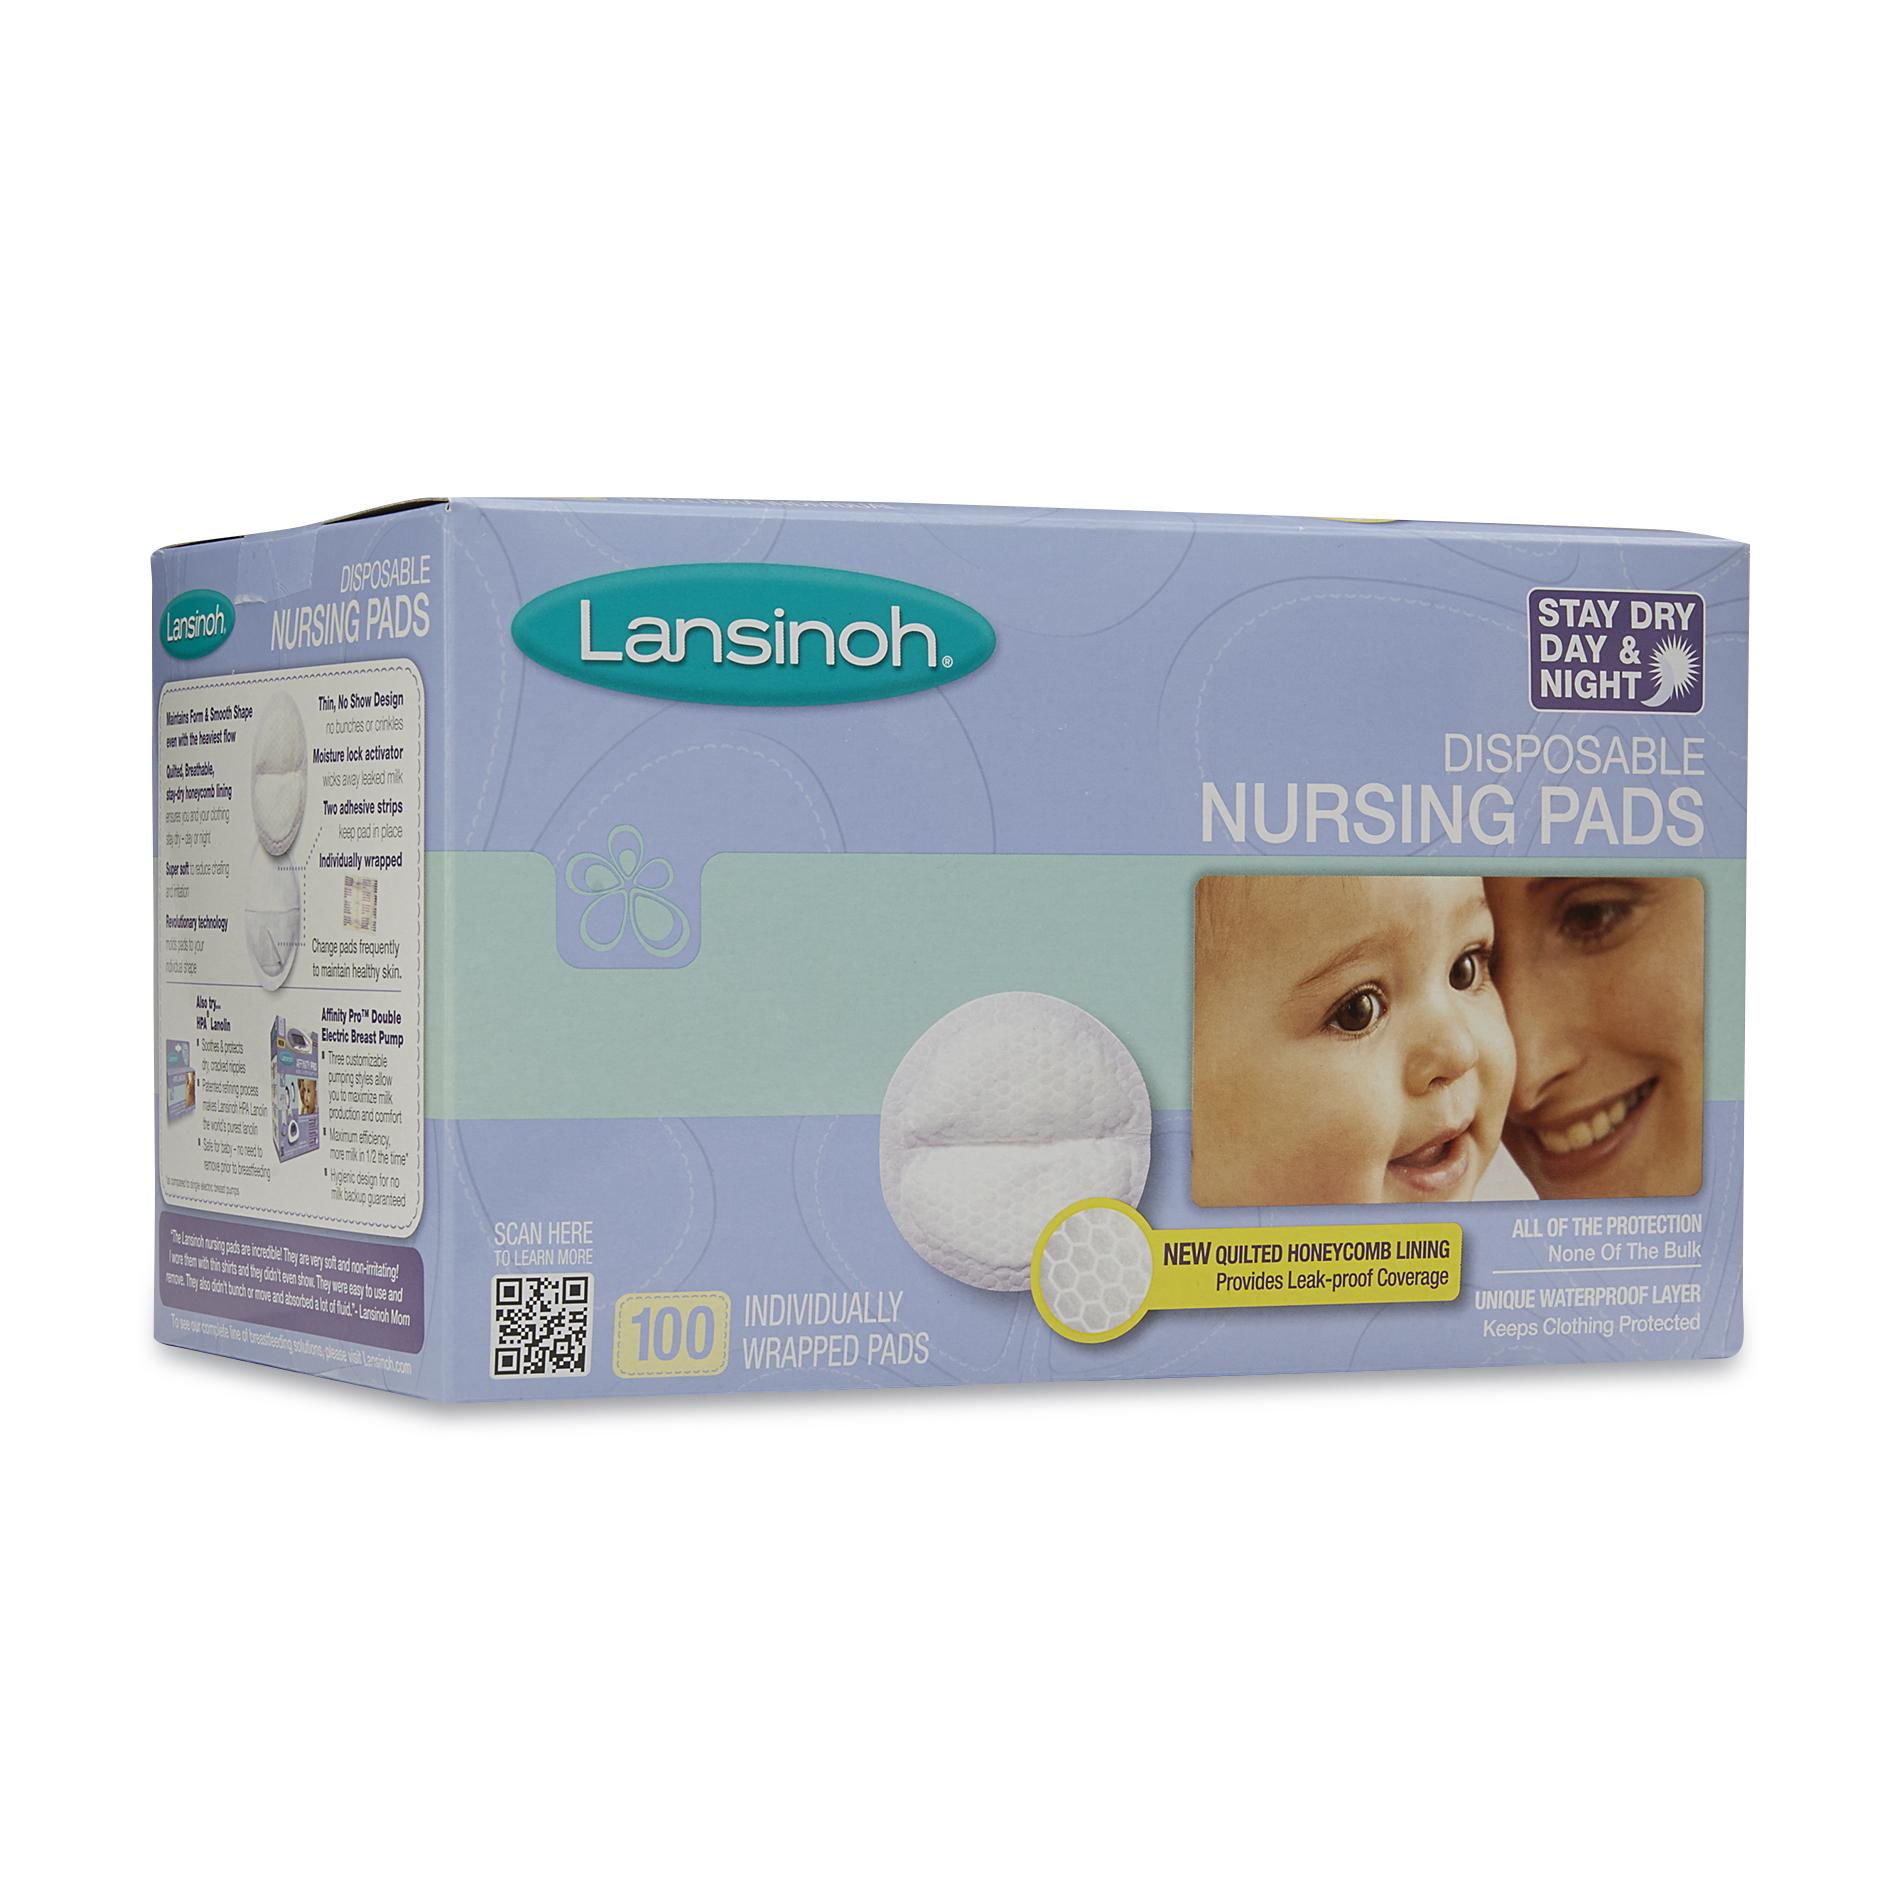 Lansinoh Stay Dry Disposable Nursing Pads 100ct, individually